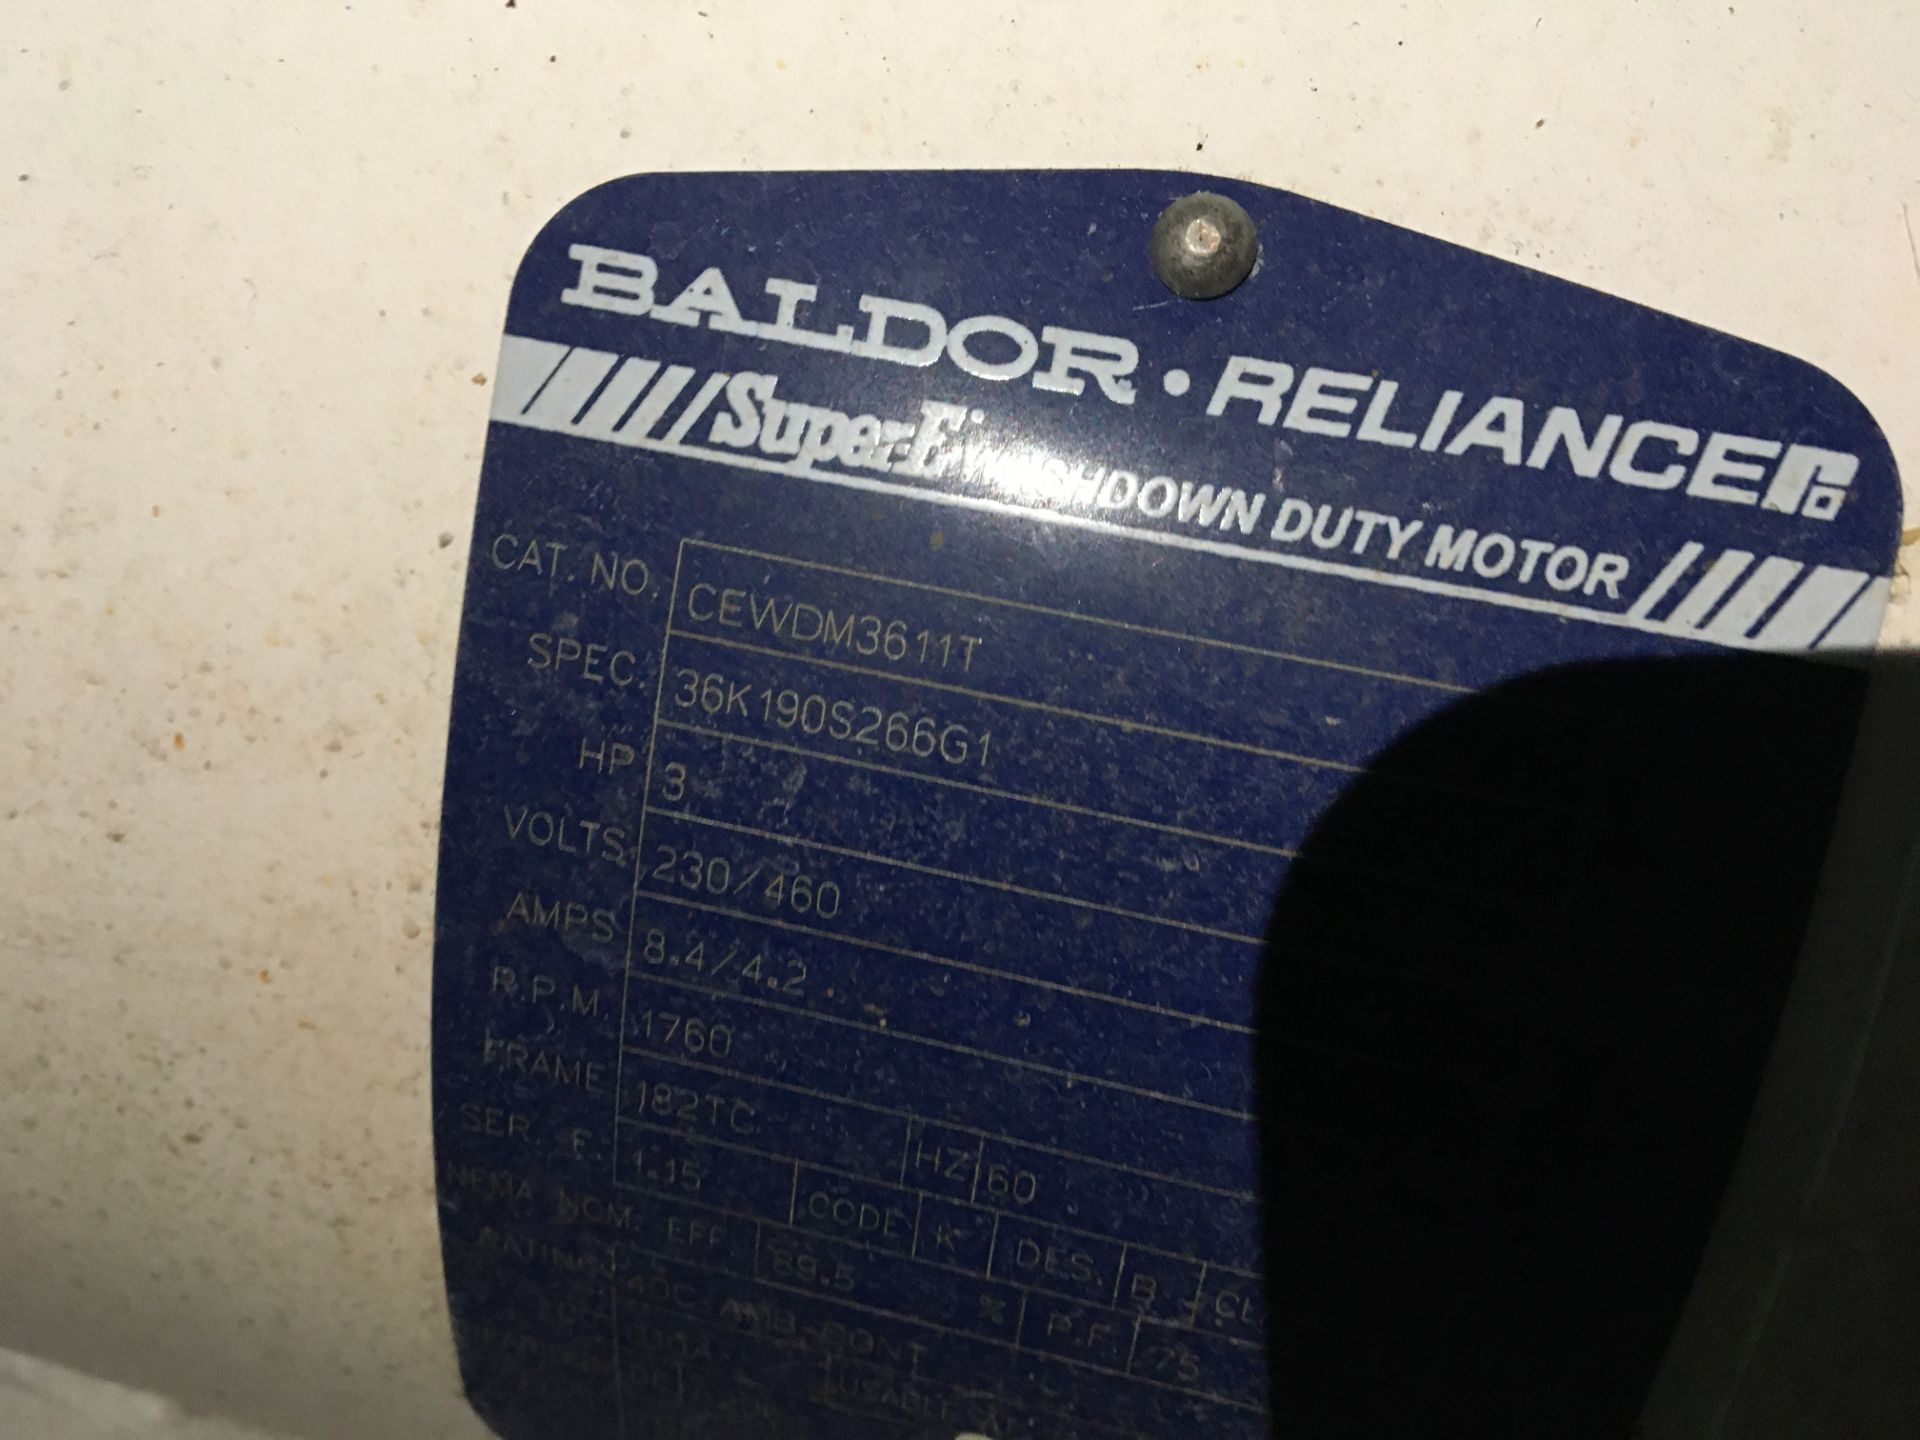 4 ea. Baldor-Reliance 3 HP Motors, Model 36K190S266G1, Serial Number F1711130515, F1711130410, - Image 18 of 27